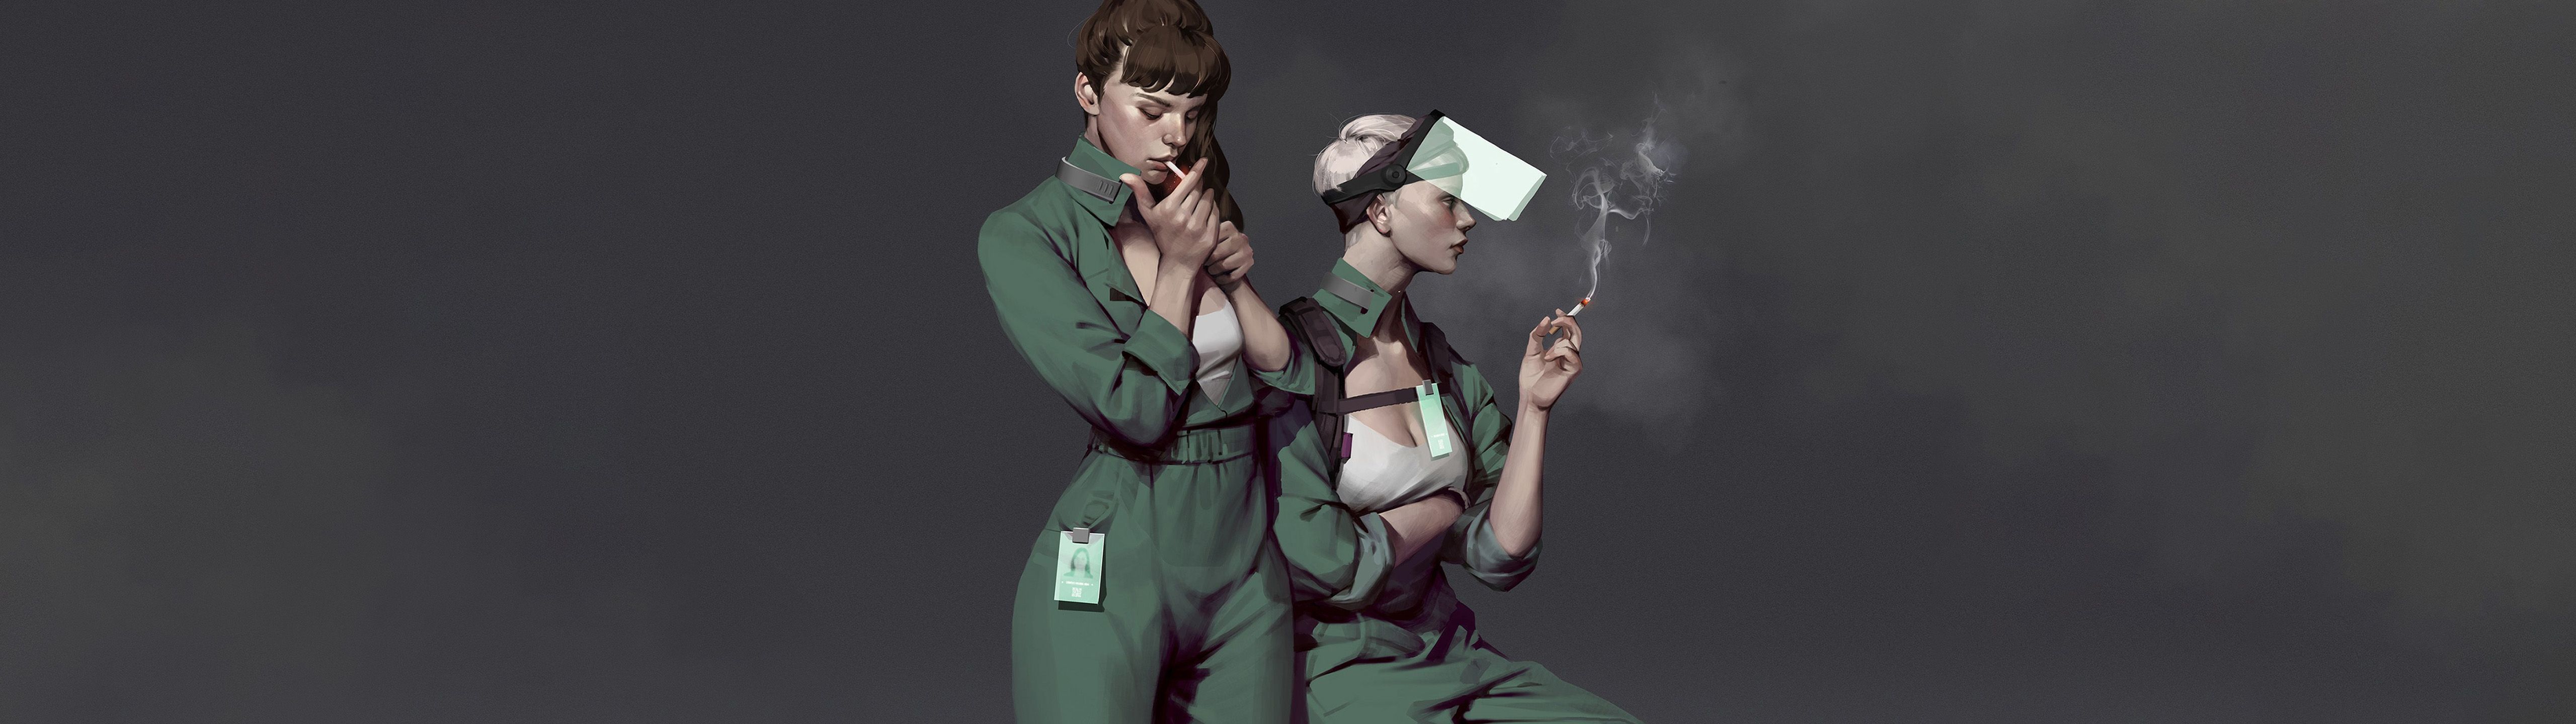 Ultrawide Digital Art Siwoo Kim Women Smoking Break Time Wallpaper:5120x1440